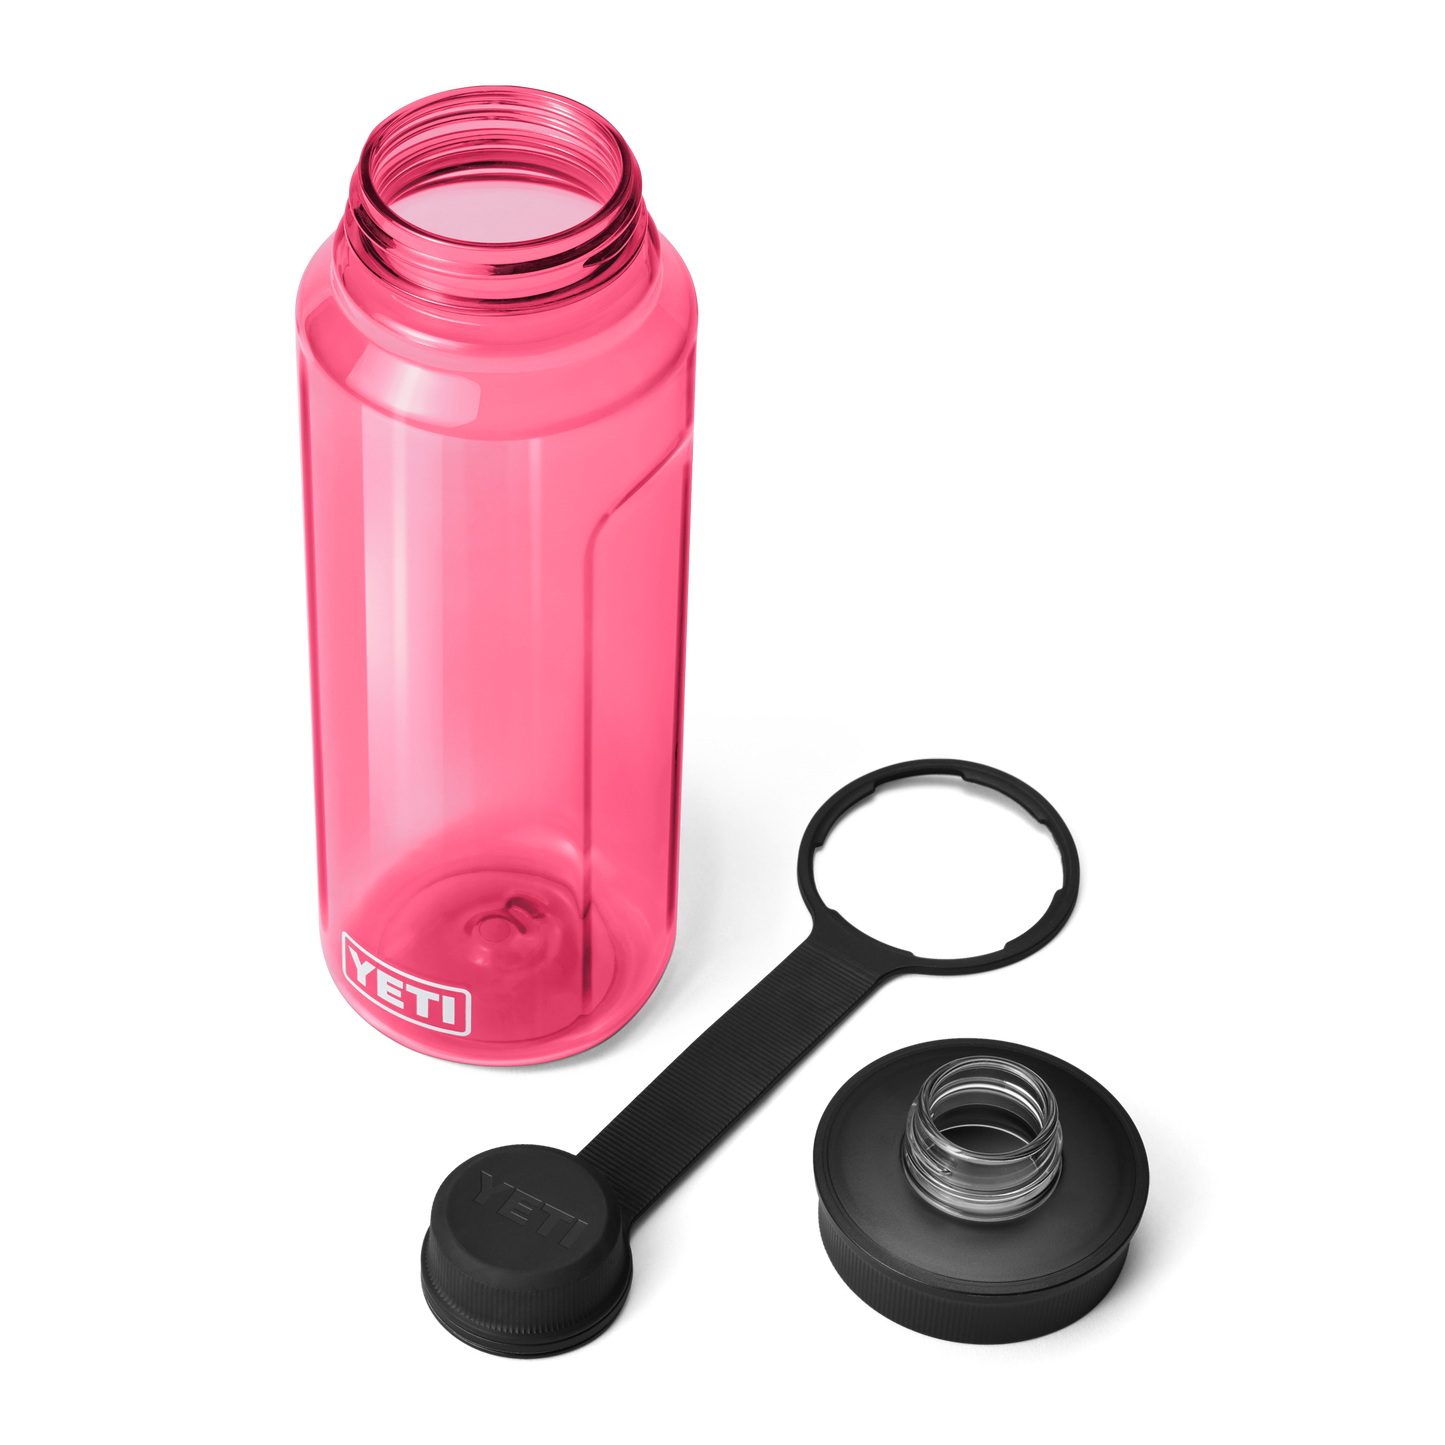 YETI Yonder™ 34 Oz (1L) Wasserflasche Tropical Pink